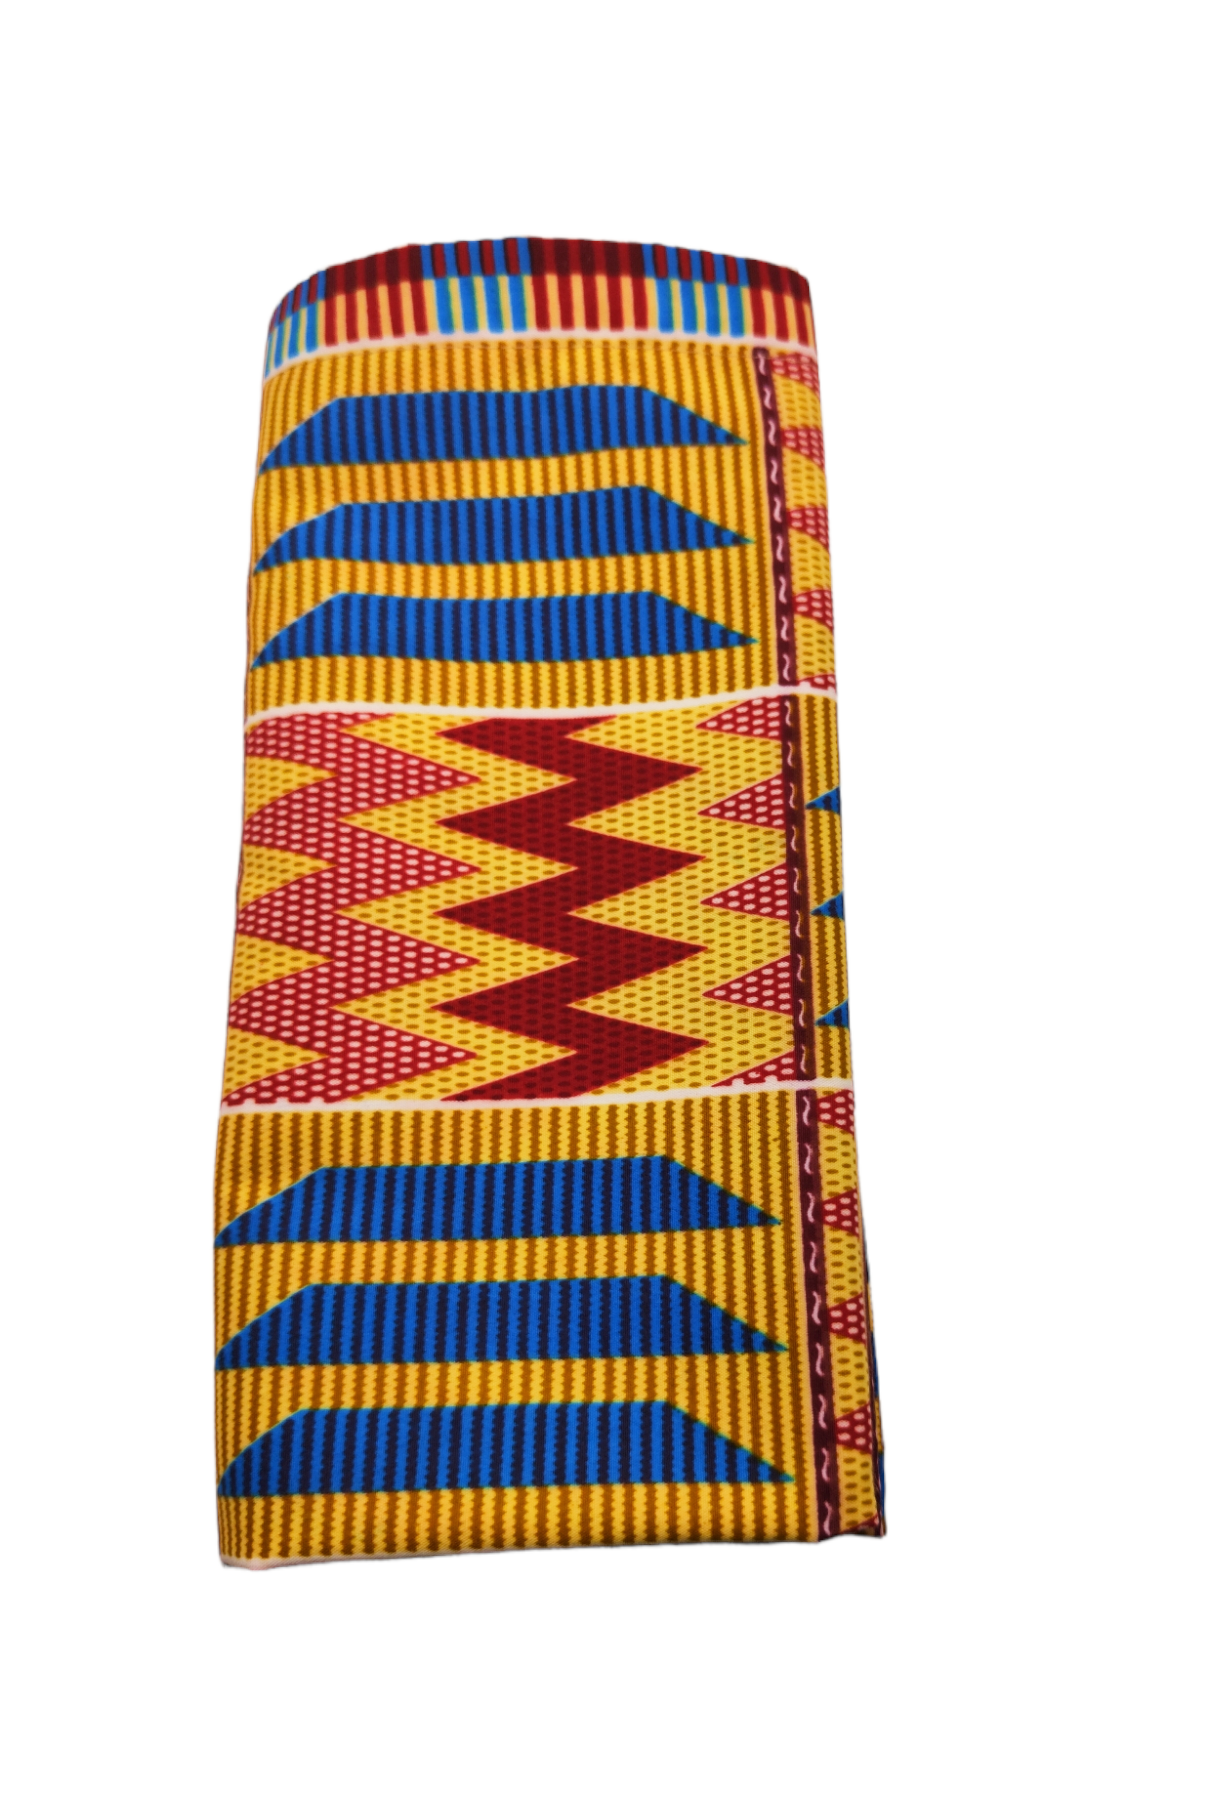 EWURAMA silk lined headwrap